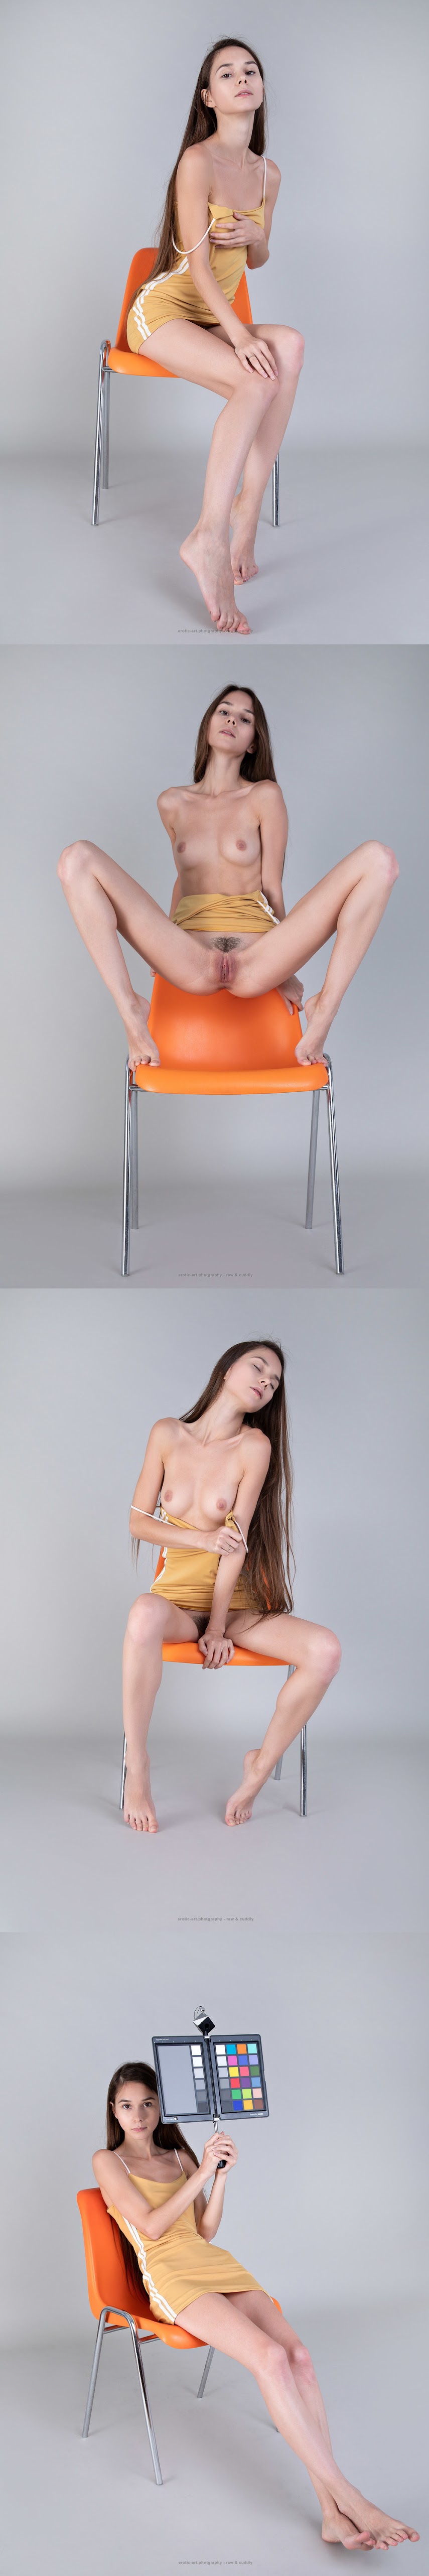 Erotic-Art 2020-09-03 - Sensational 36 3000x4500